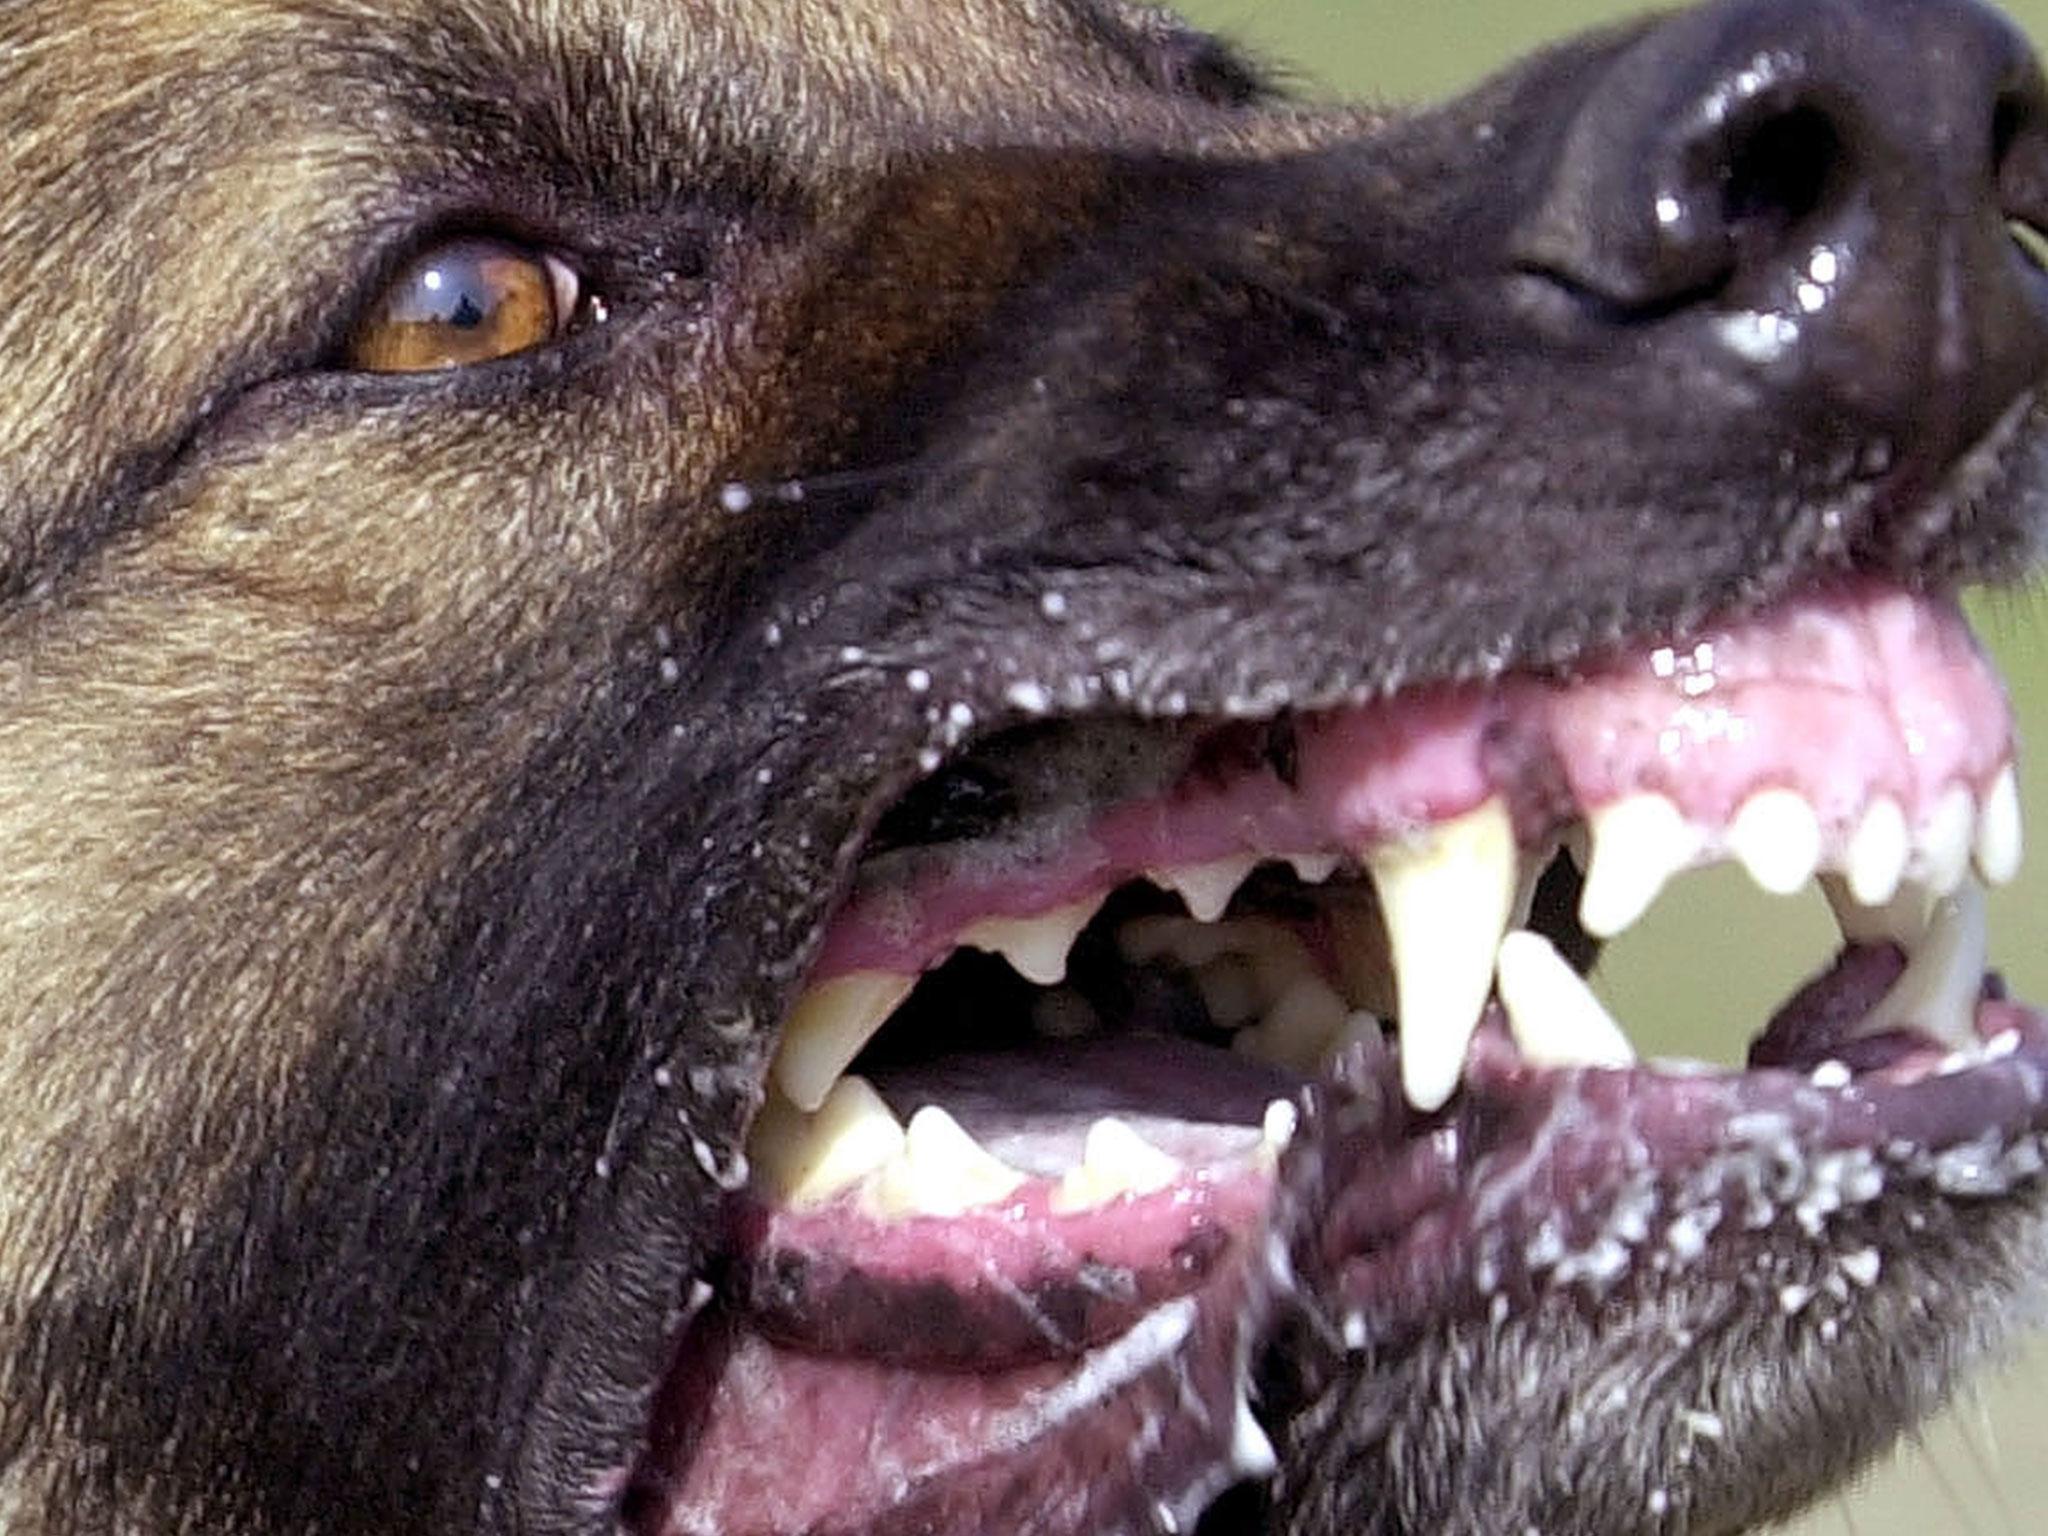 13 Most Intelligent Dog Breeds Revealed